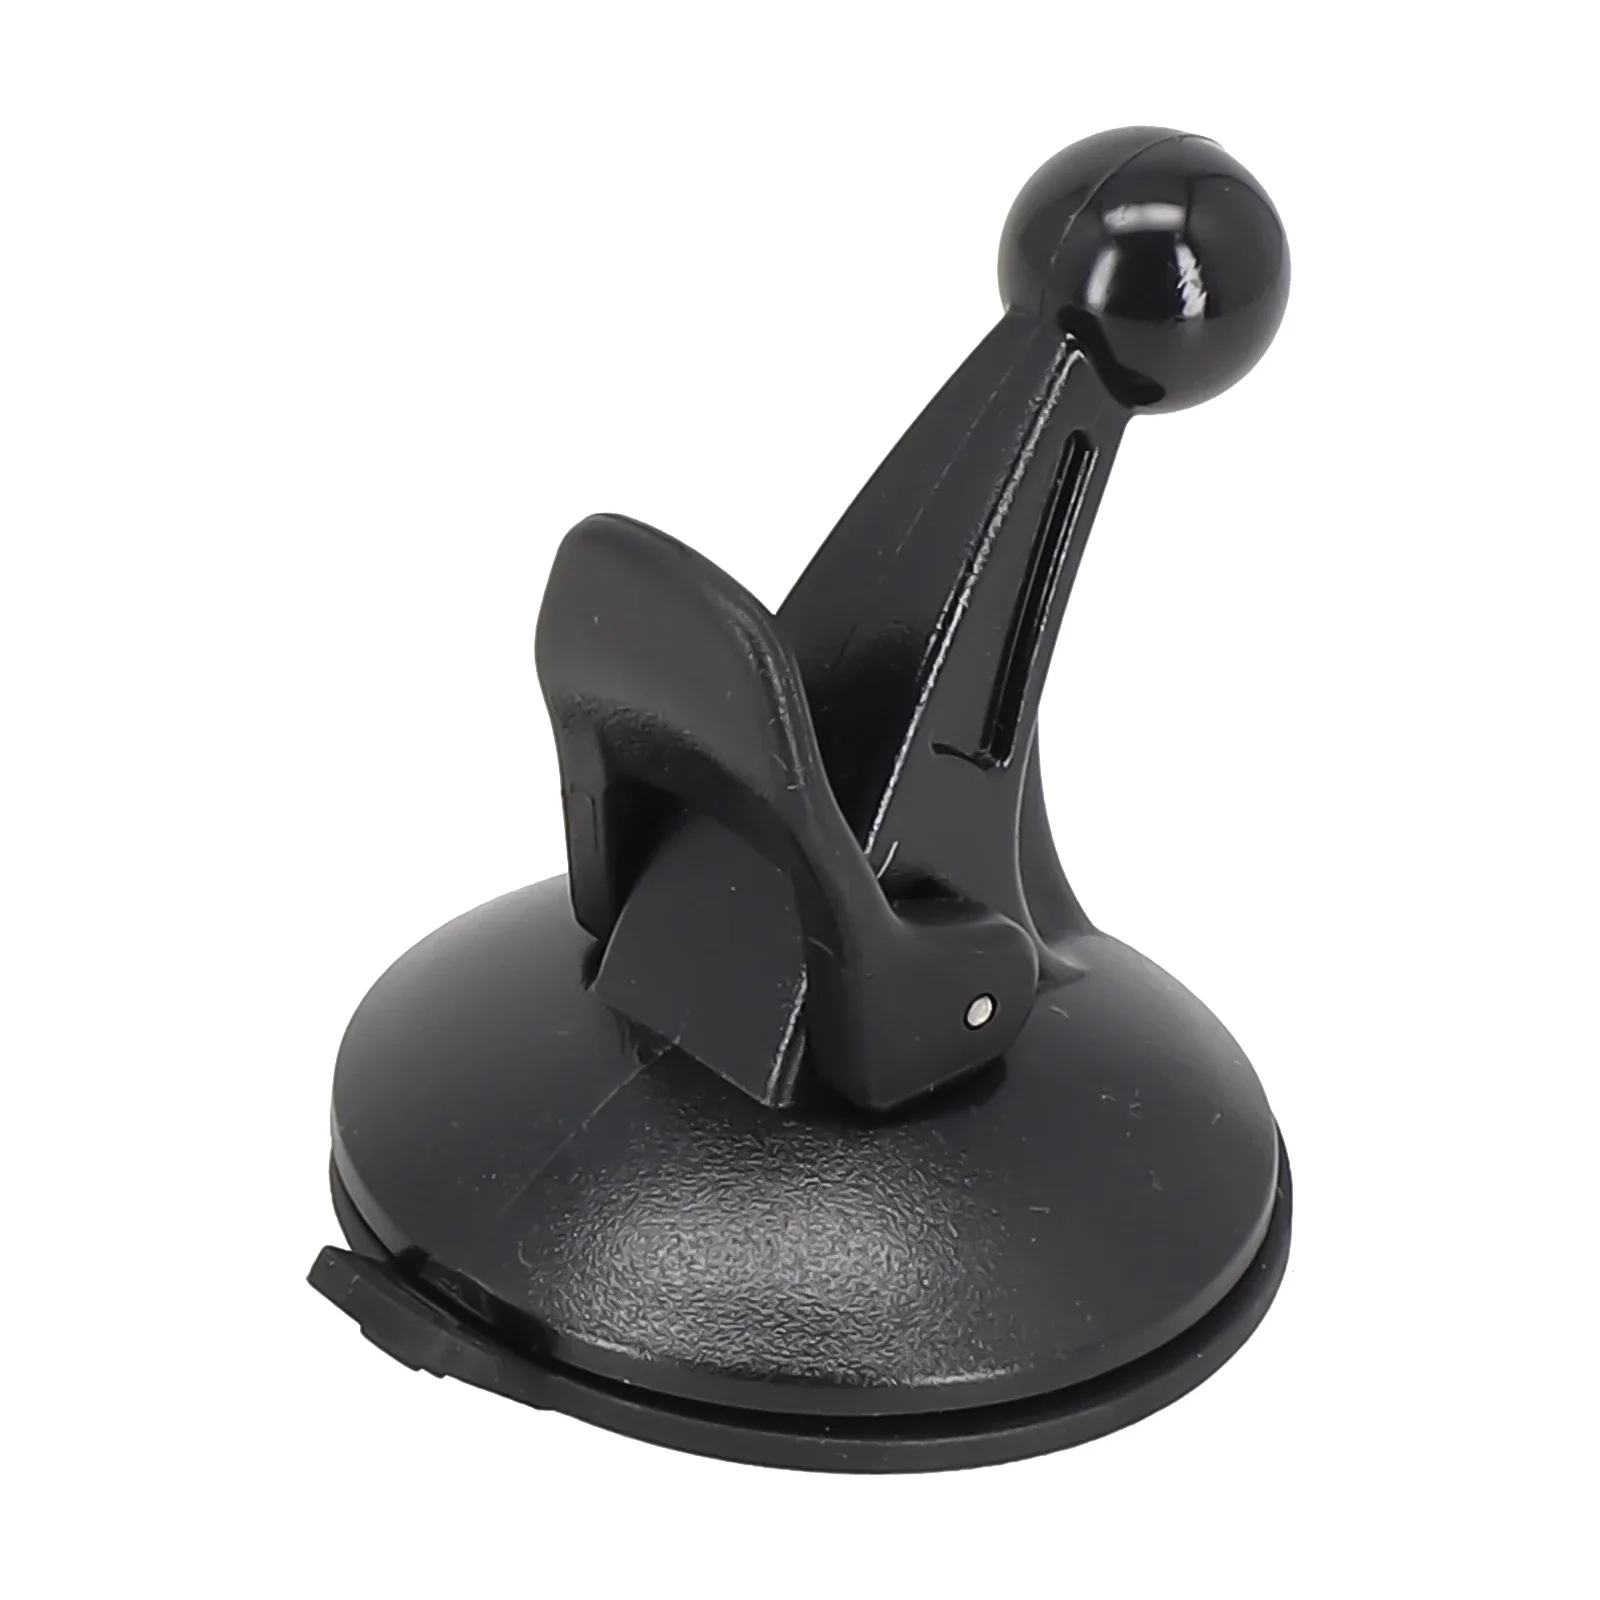 Garmin Navigator Car Mount - Brand New, High Quality, Plastic, Black, Easy To Install, 1.7cm Round Head